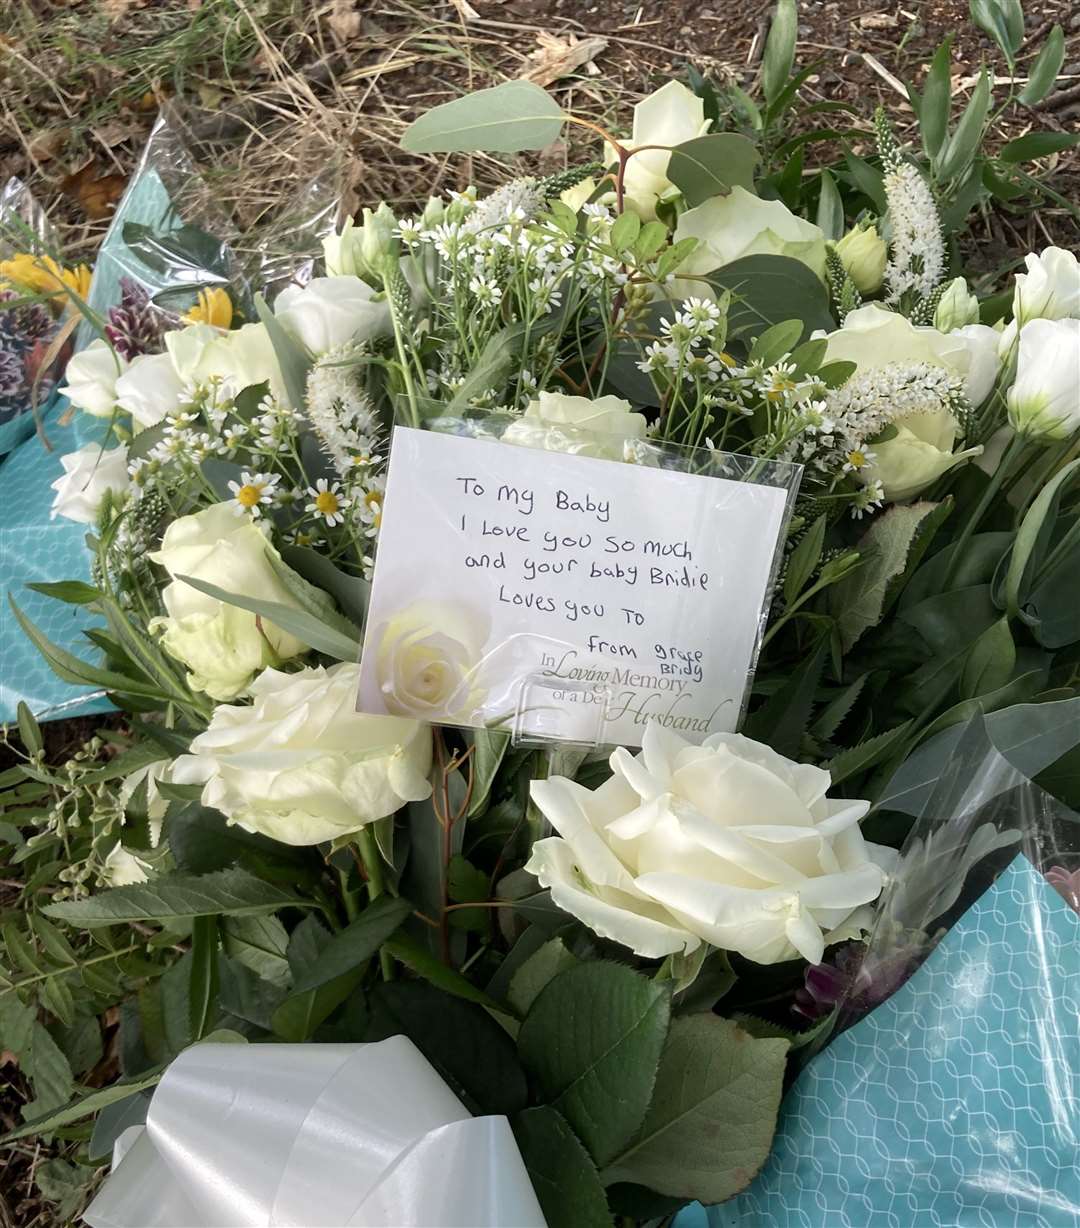 Flowers left by Johnboy's wife Grace